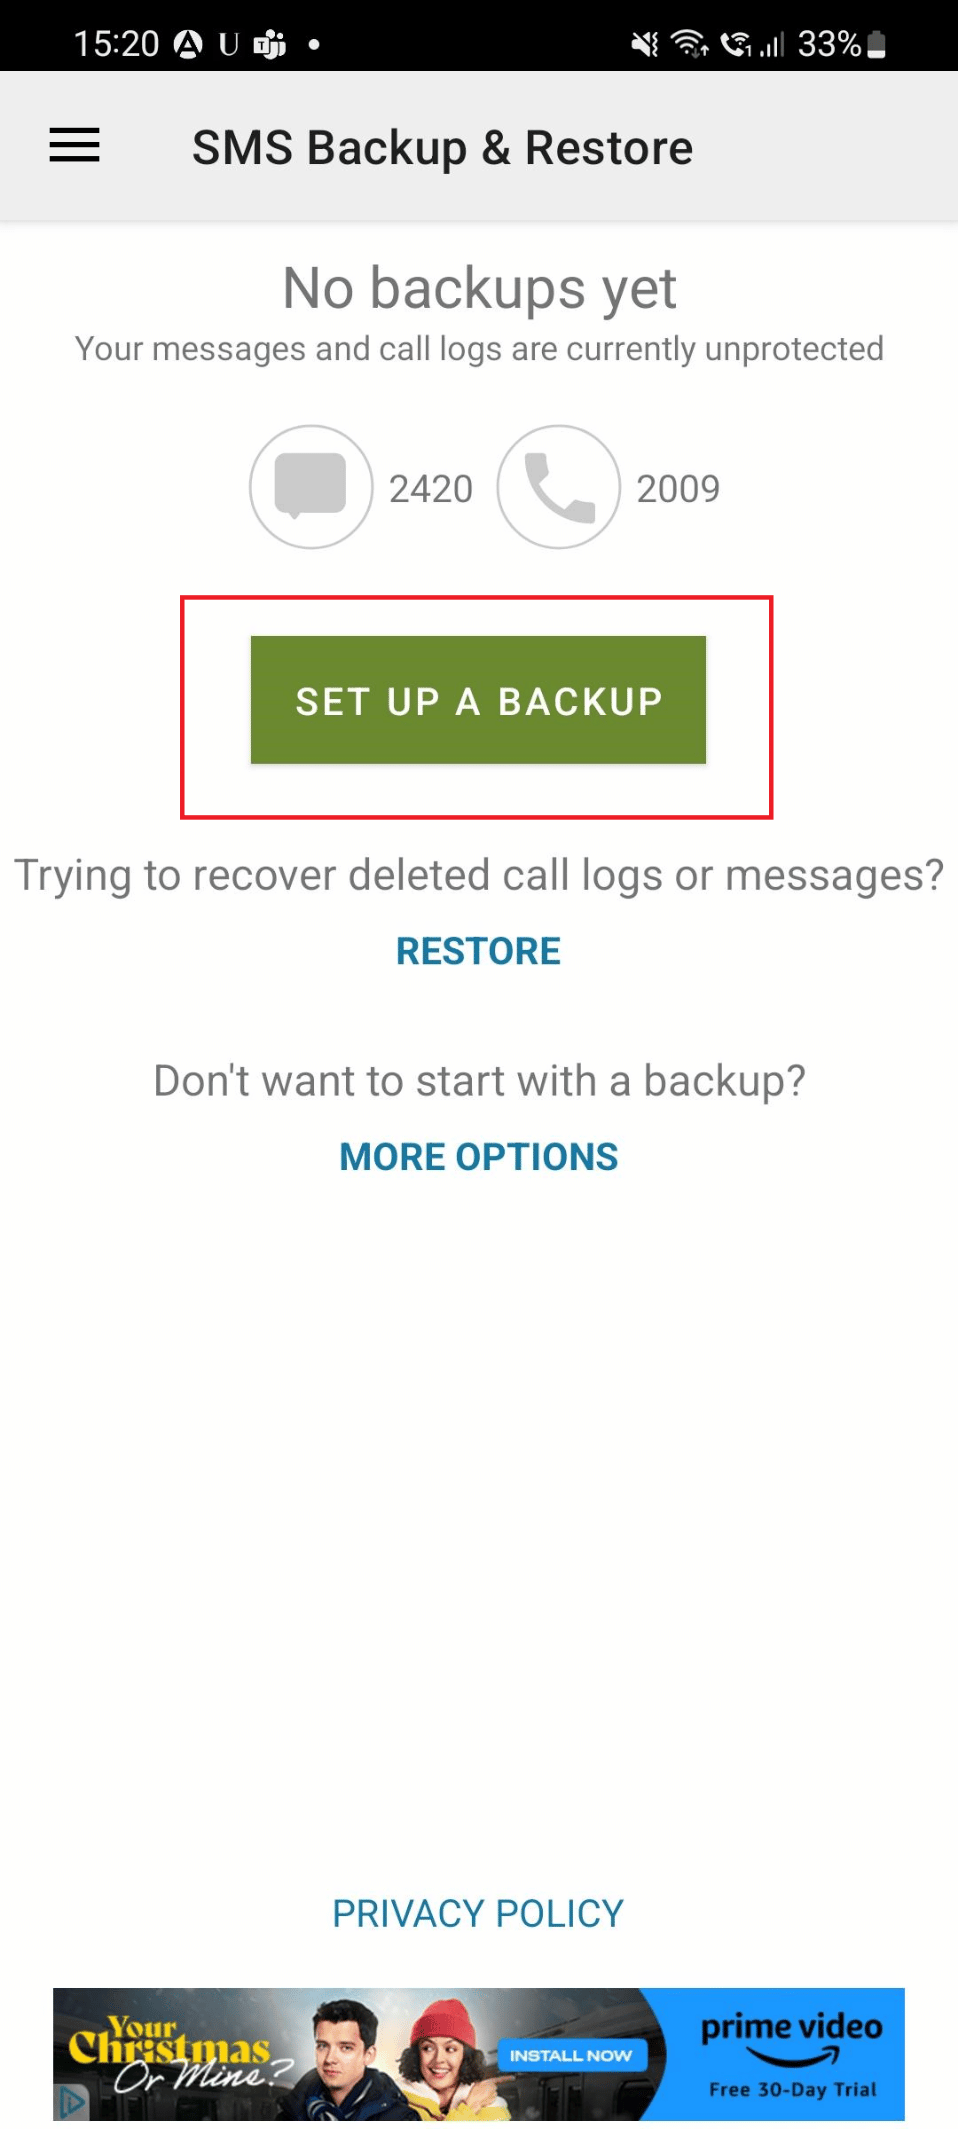 Tap on the Set Up A Backup option